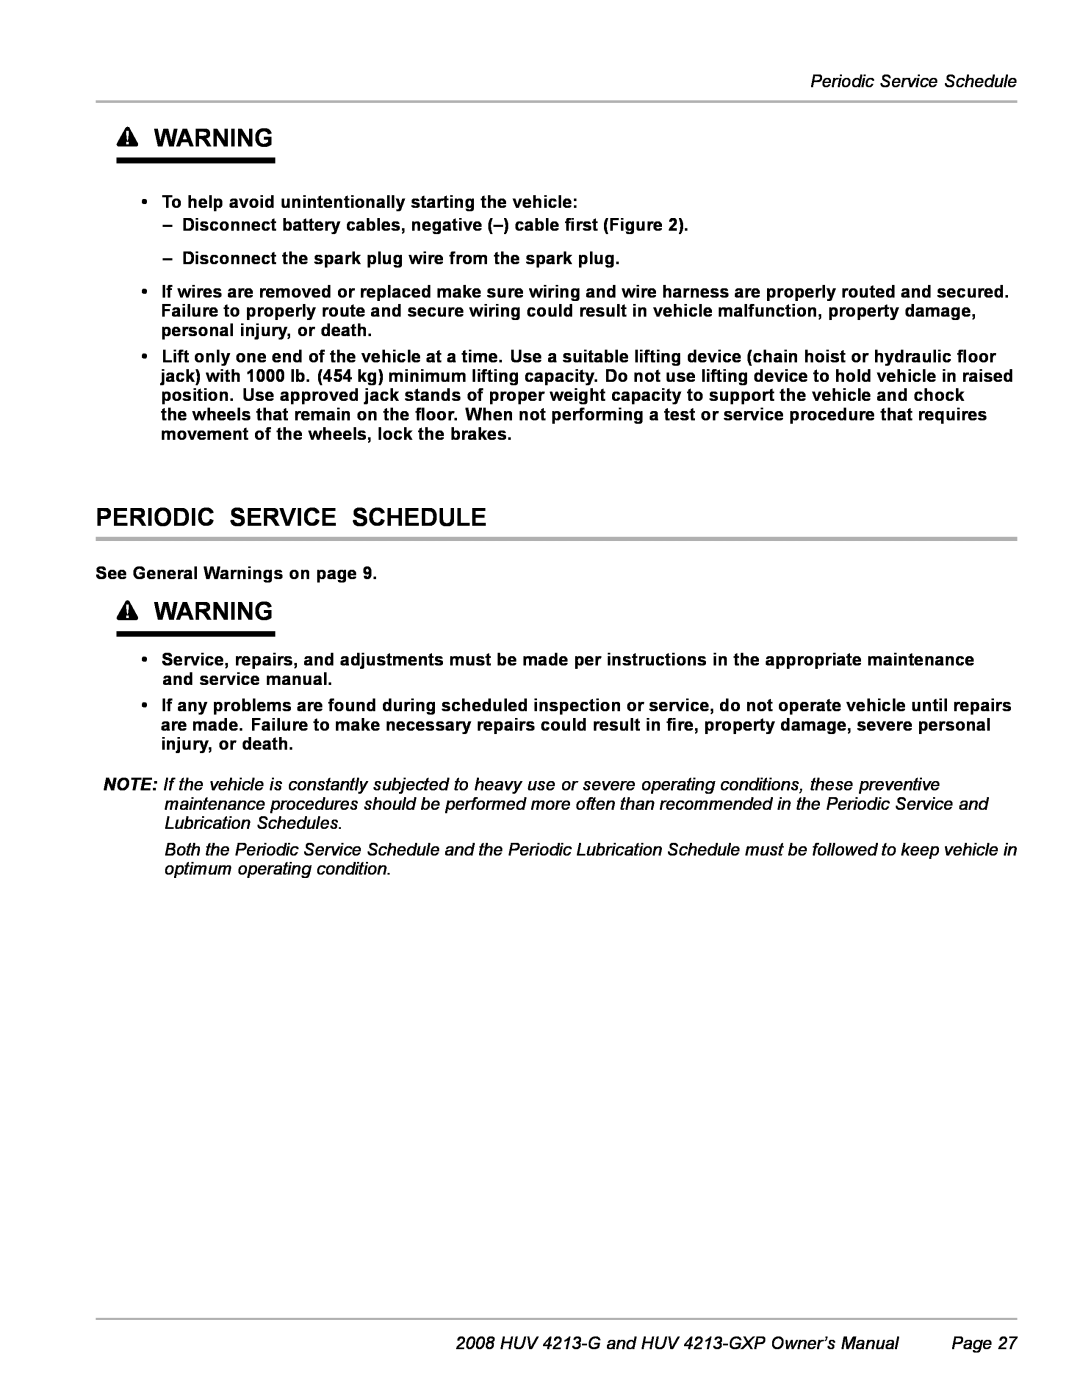 Husqvarna HUV 4213-GXP owner manual Periodic Service Schedule 